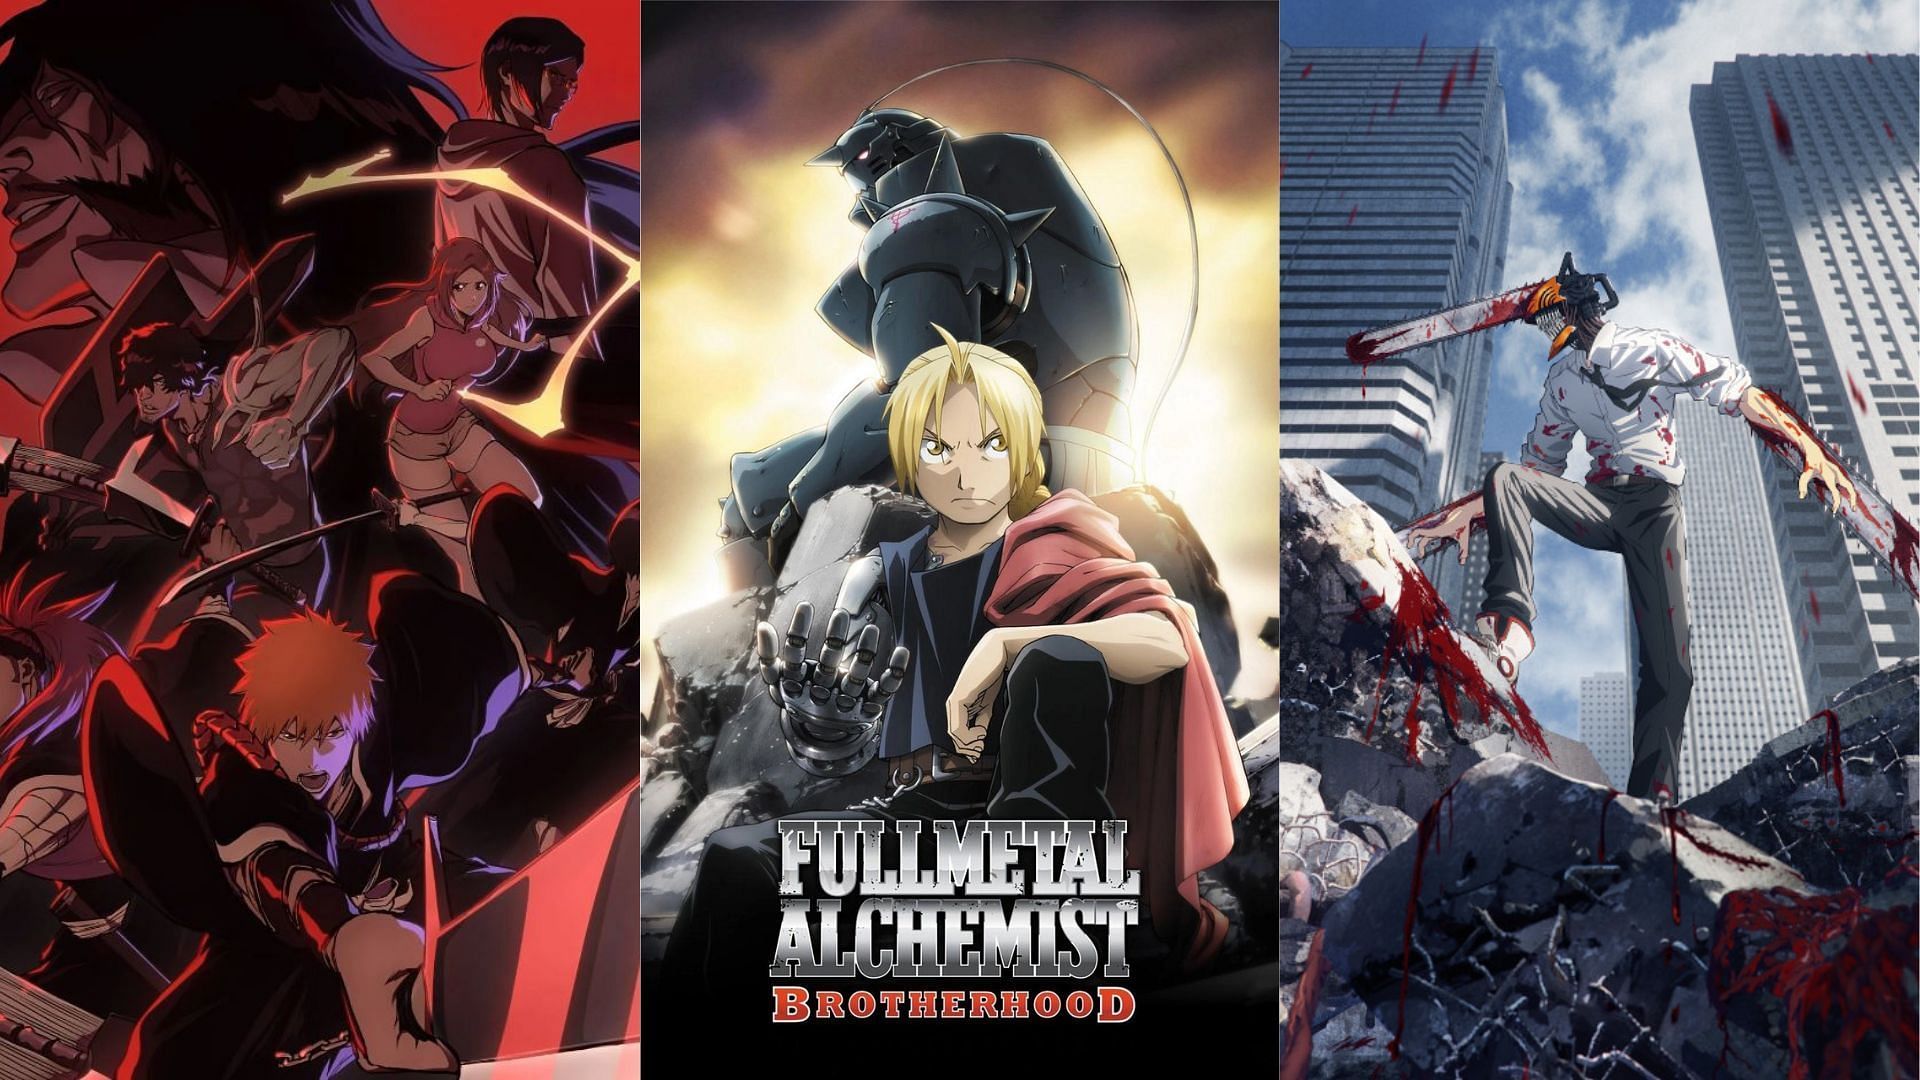 Fullmetal Alchemist Brotherhood Dethroned: New Anime At Top of My